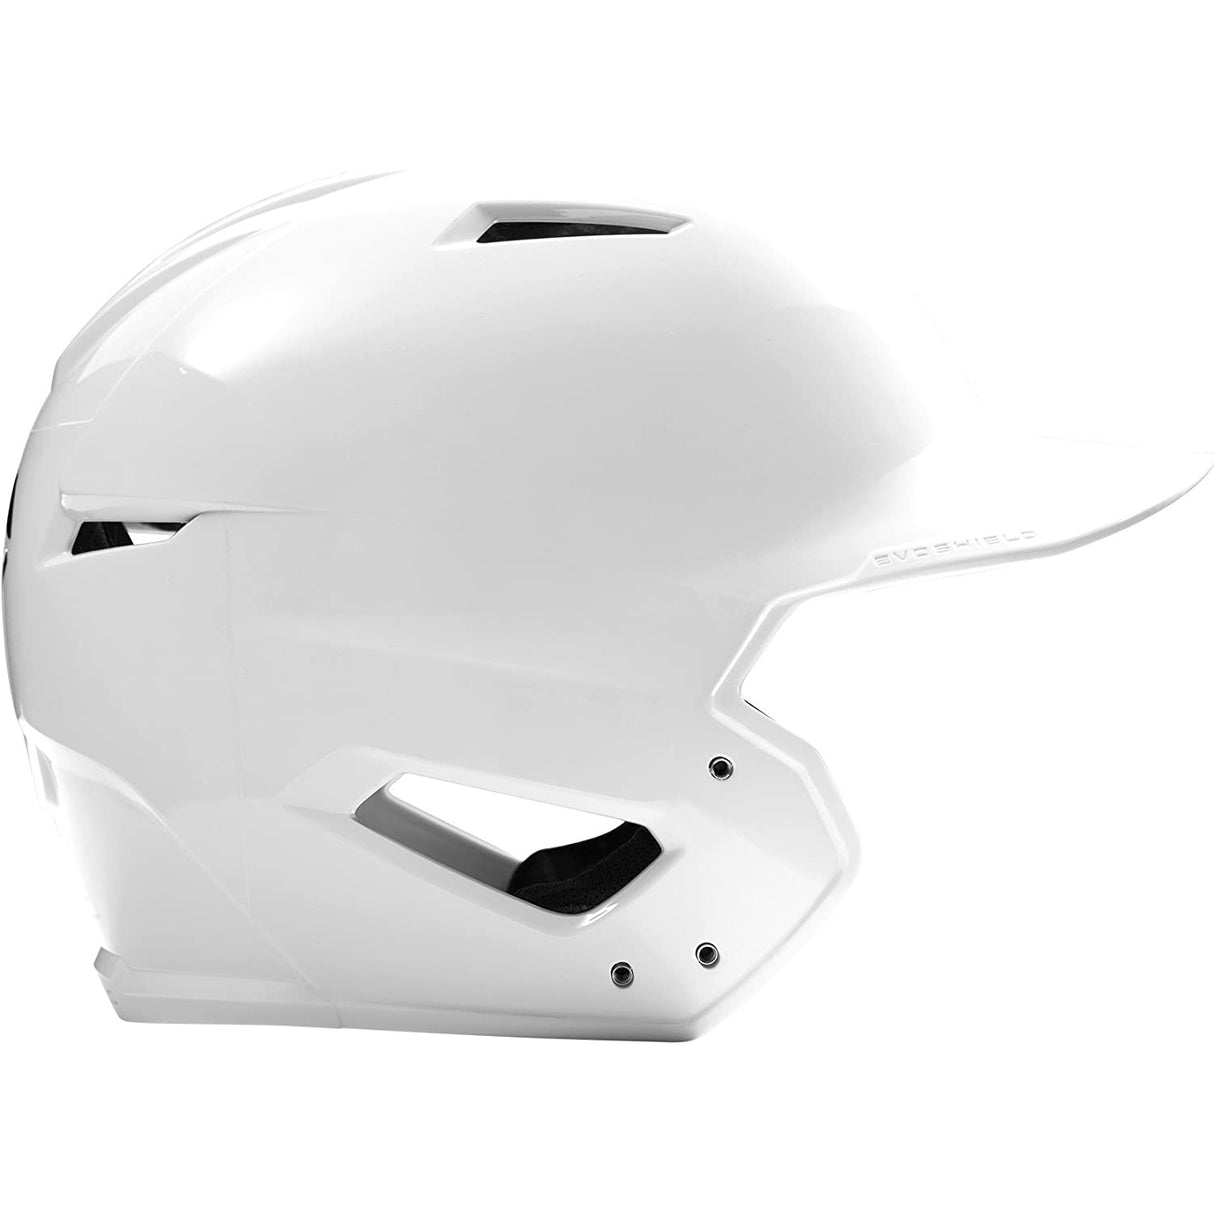 EvoShield-Batting Helmets-Guardian Baseball